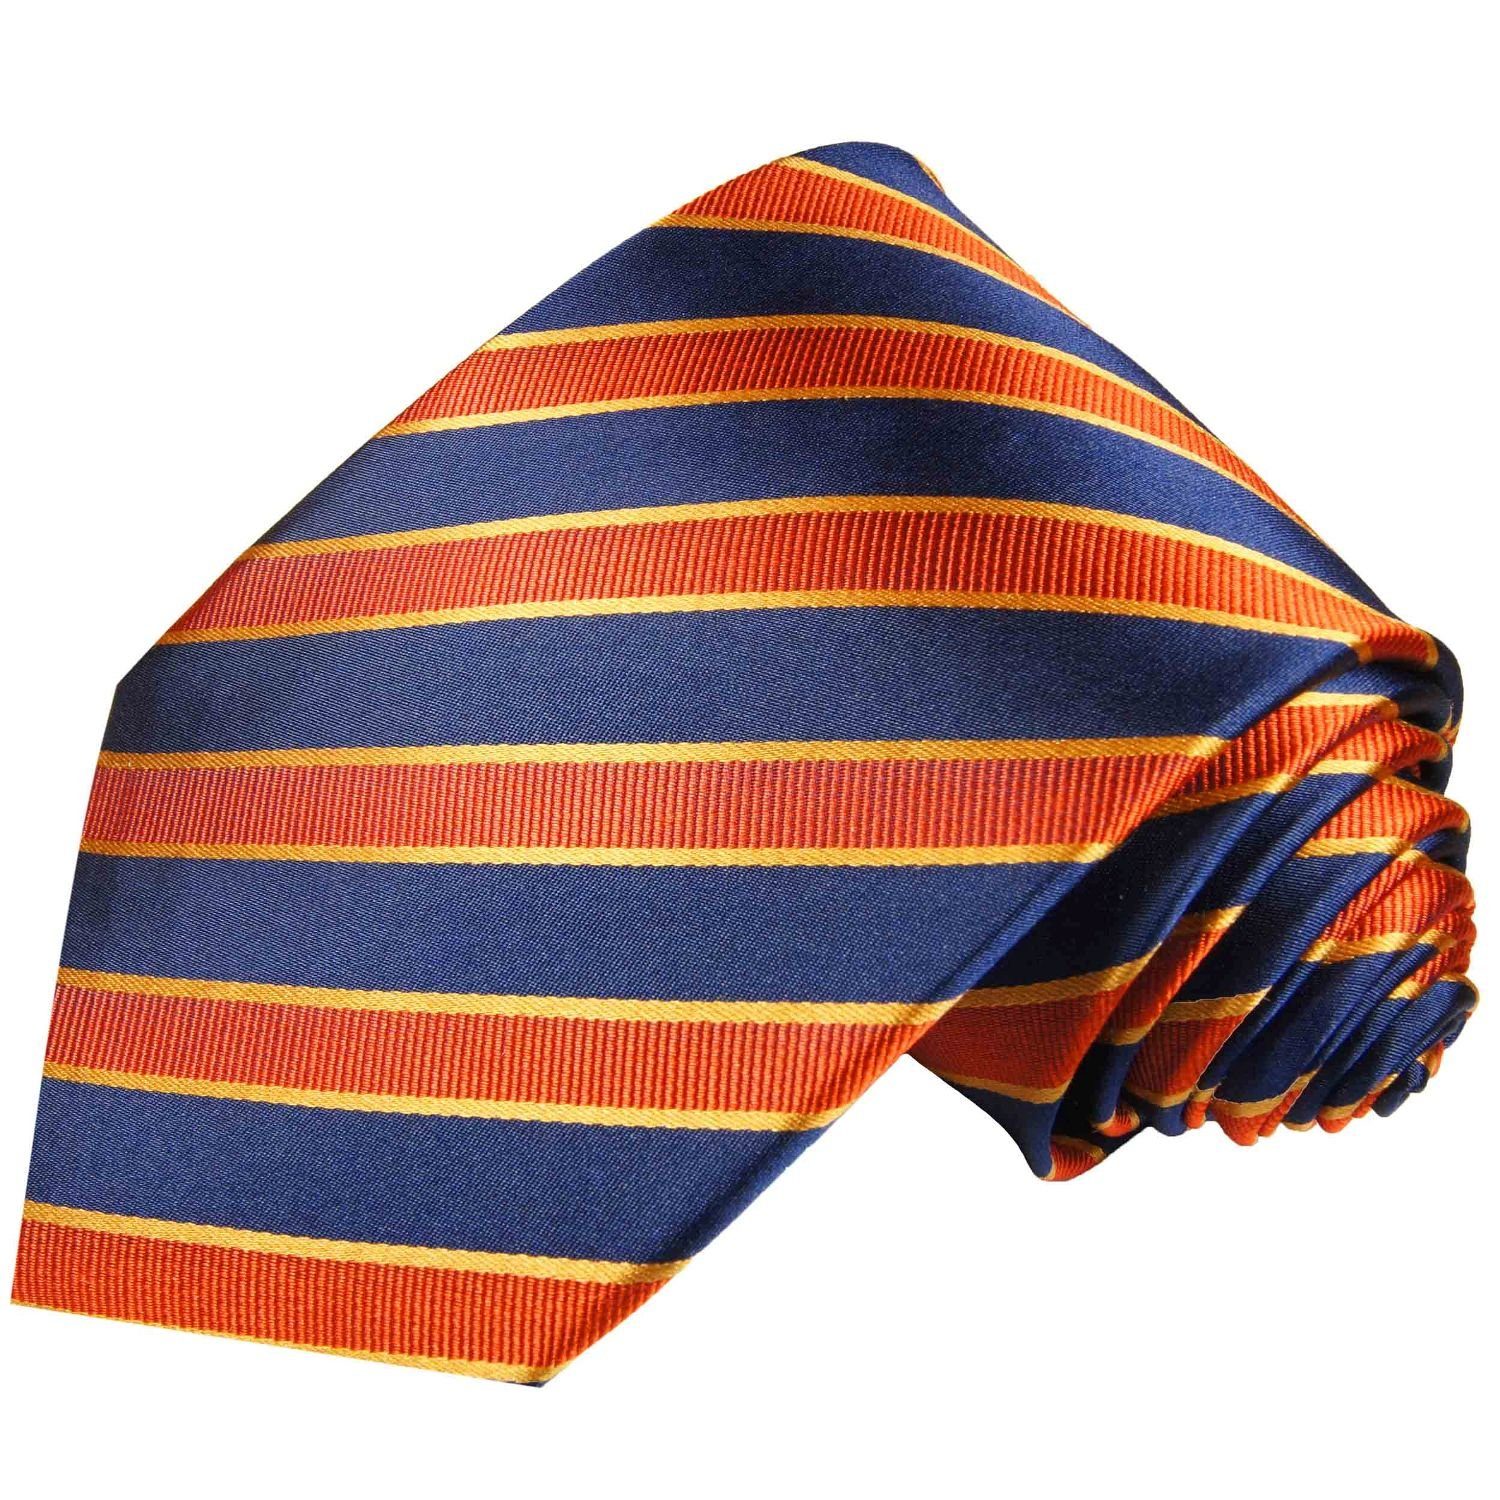 Herren Krawatten Paul Malone Krawatte Designer Seidenkrawatte Herren Schlips modern gestreift 100% Seide Schmal (6cm), blau oran